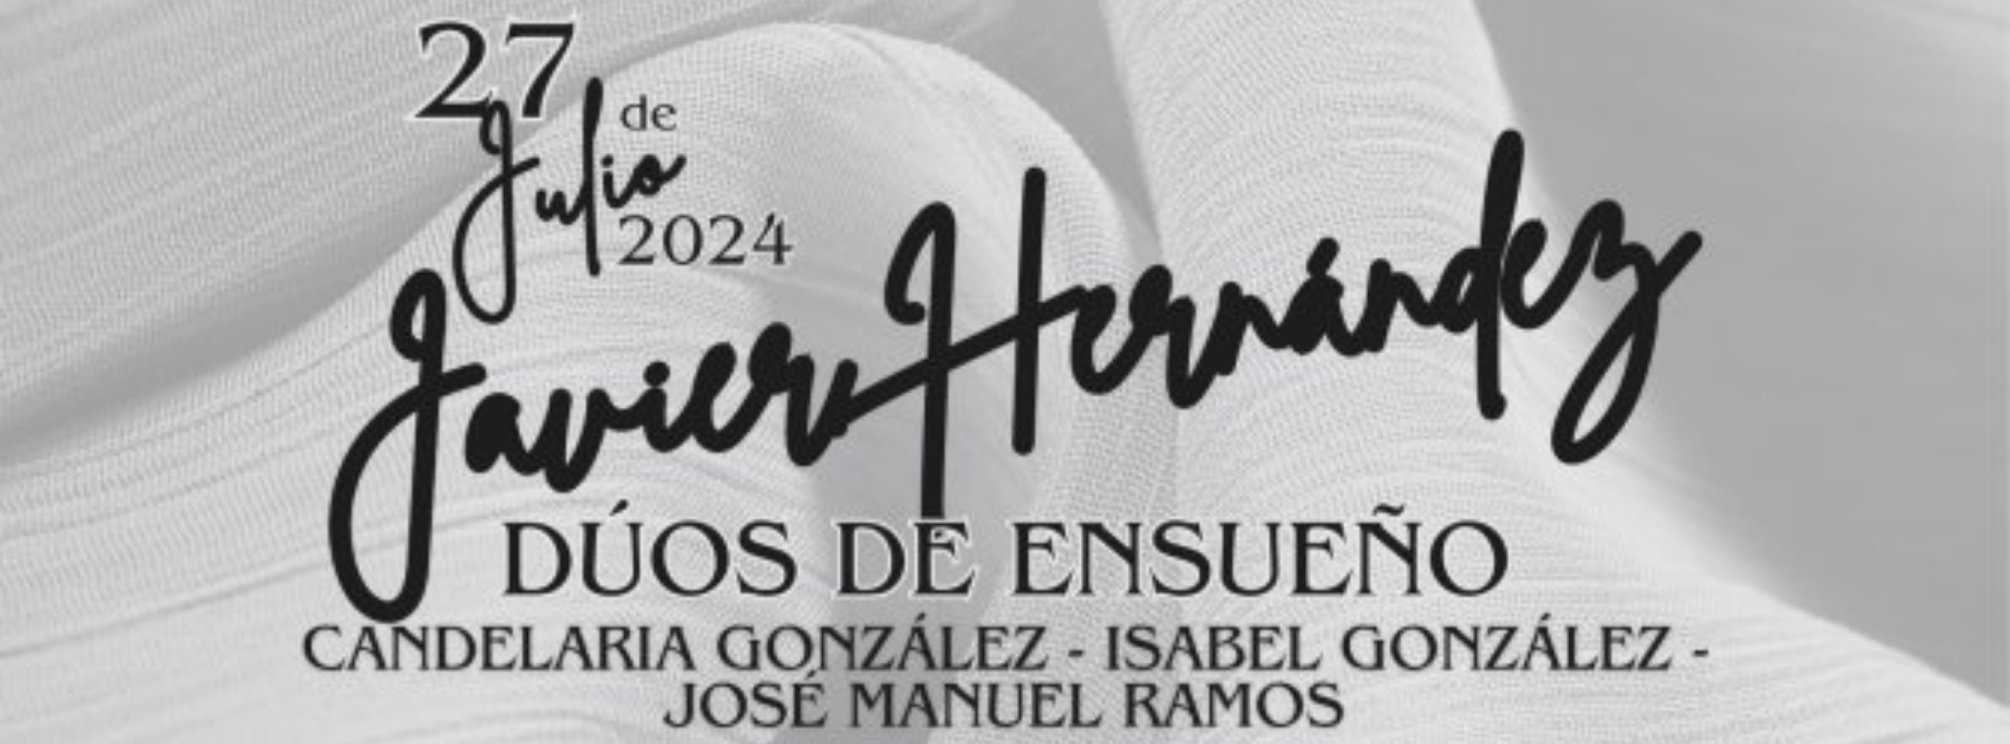 Javier Hernández - Dúos de ensueño